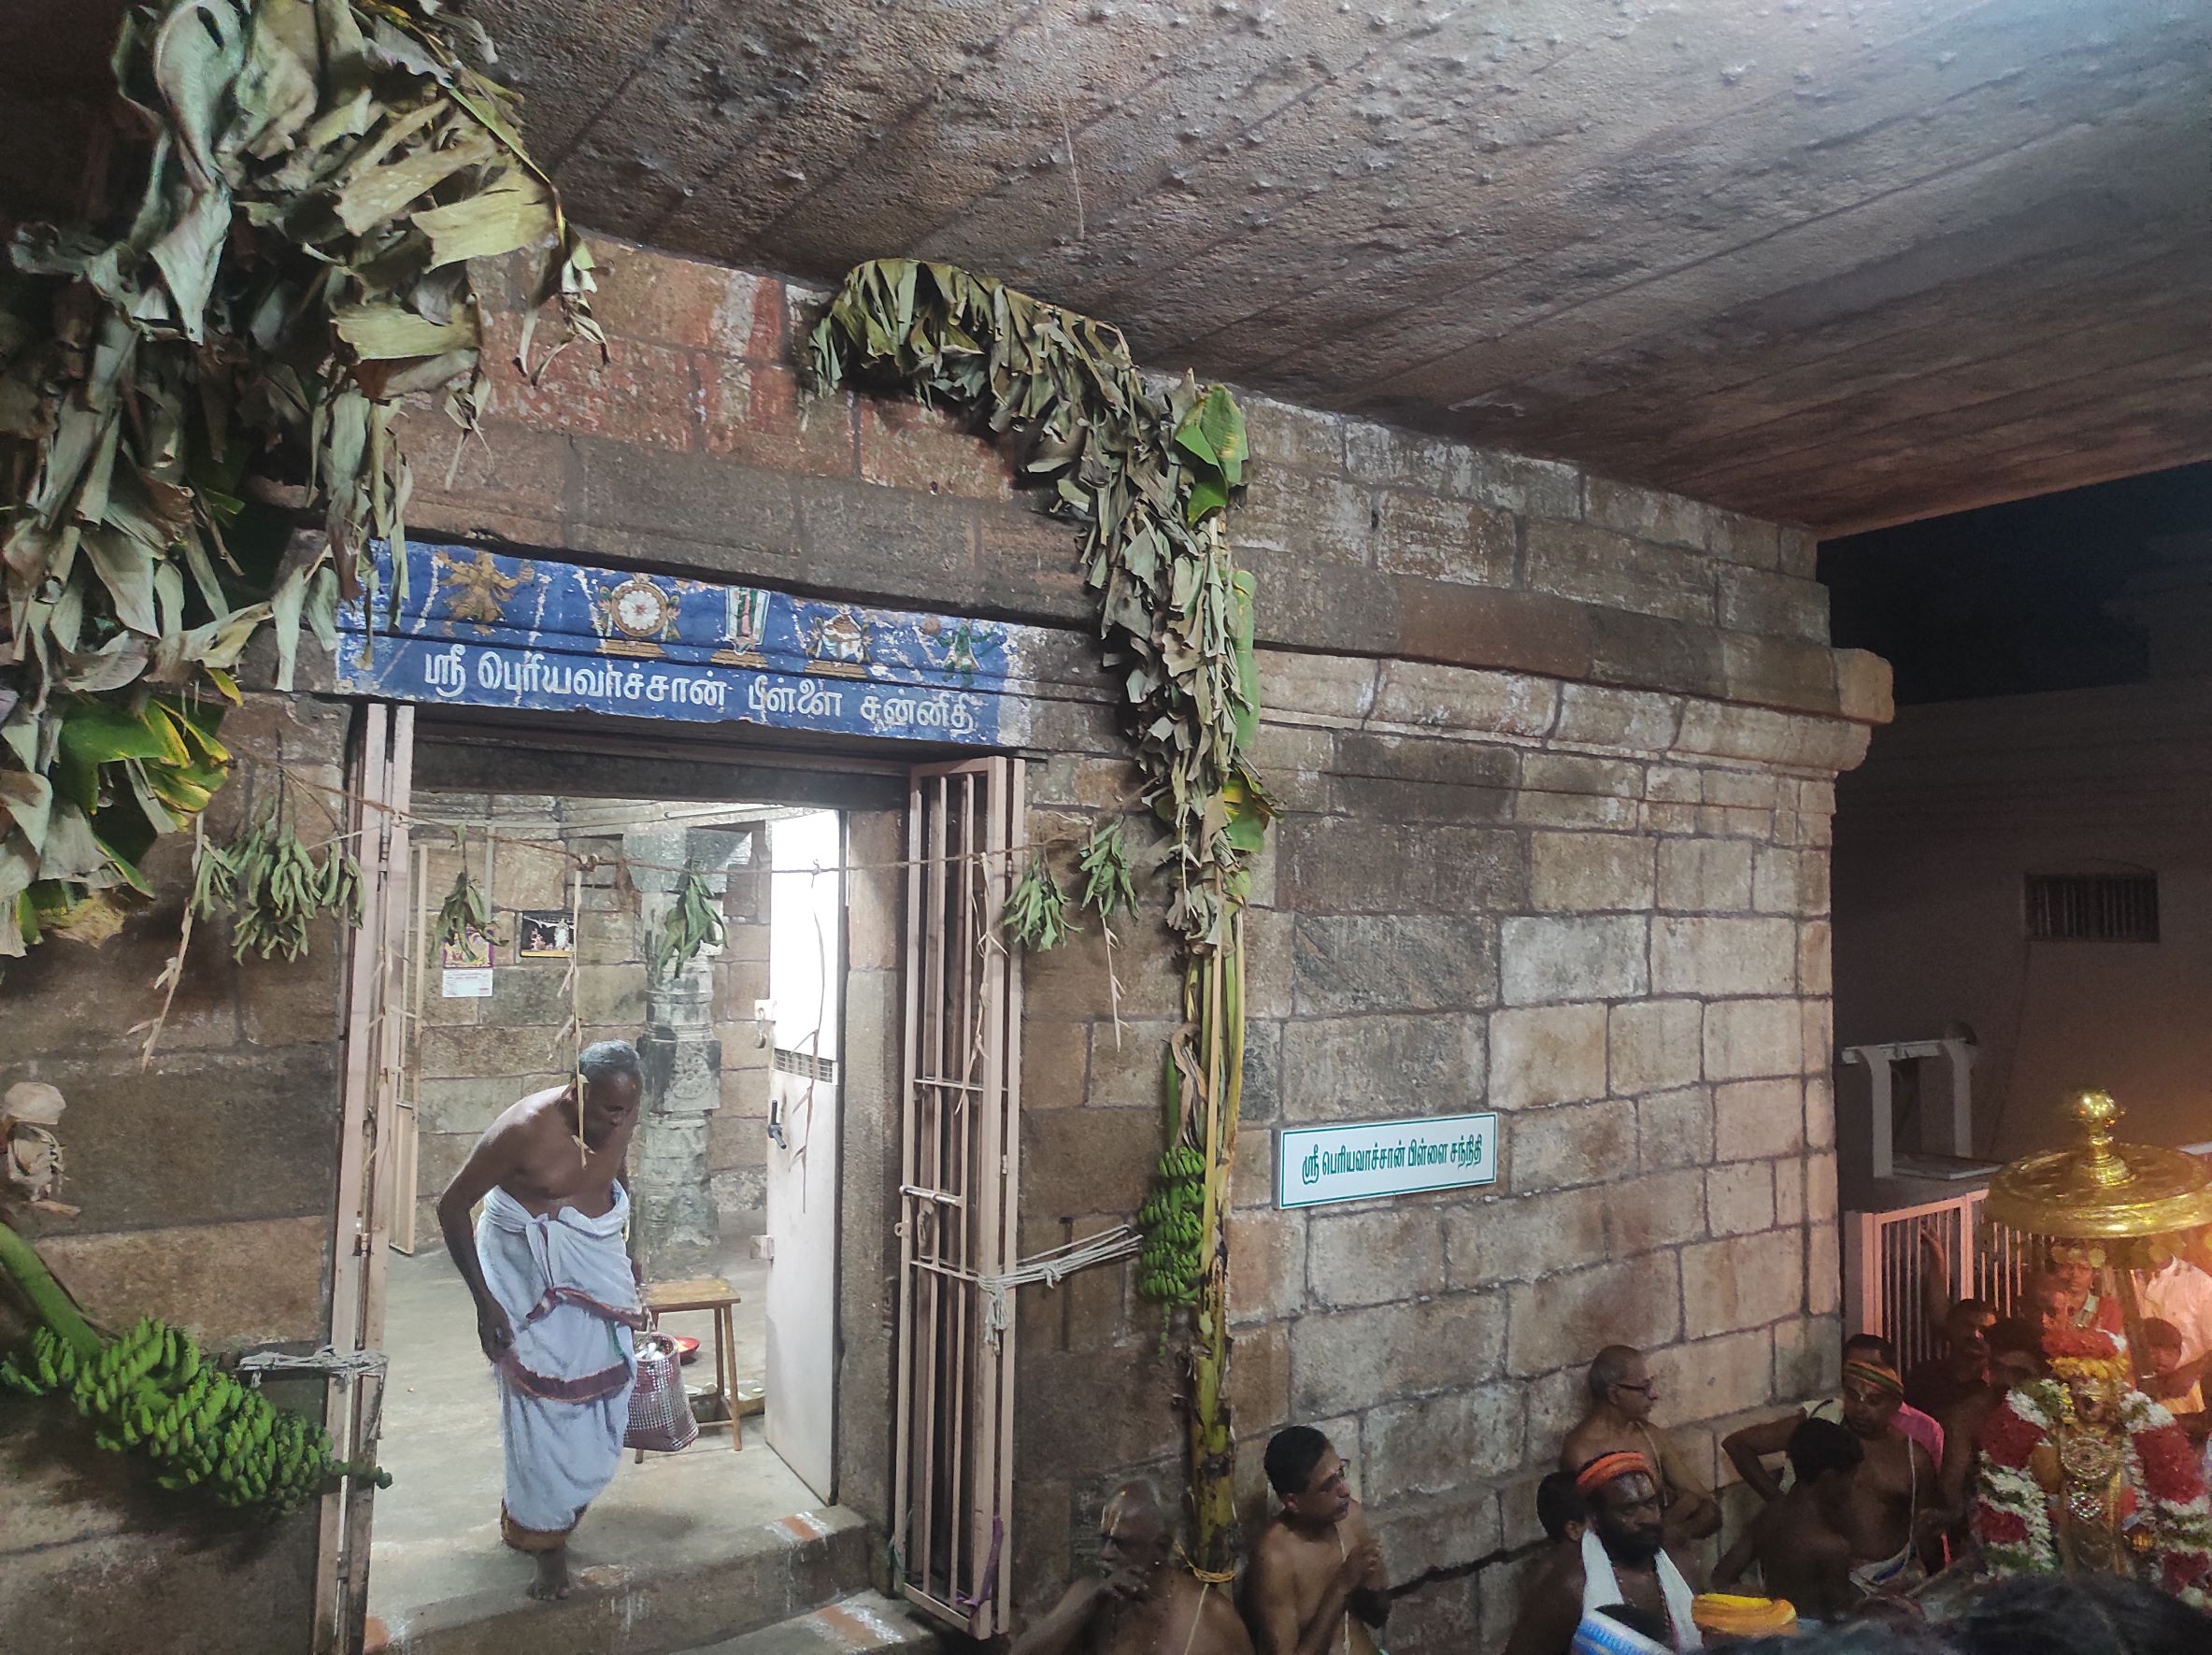 Namperumal, the Srirangam utsavar, visits the shrine of 'Vyakhyana Chakravarti' Periyavachan Pillai inside the temple during Vasanthotsavam. Periyavachan Pillai is a disciple of Nampillai, who has himself a commentary on Nammazhwar's Thiruvaimozhi